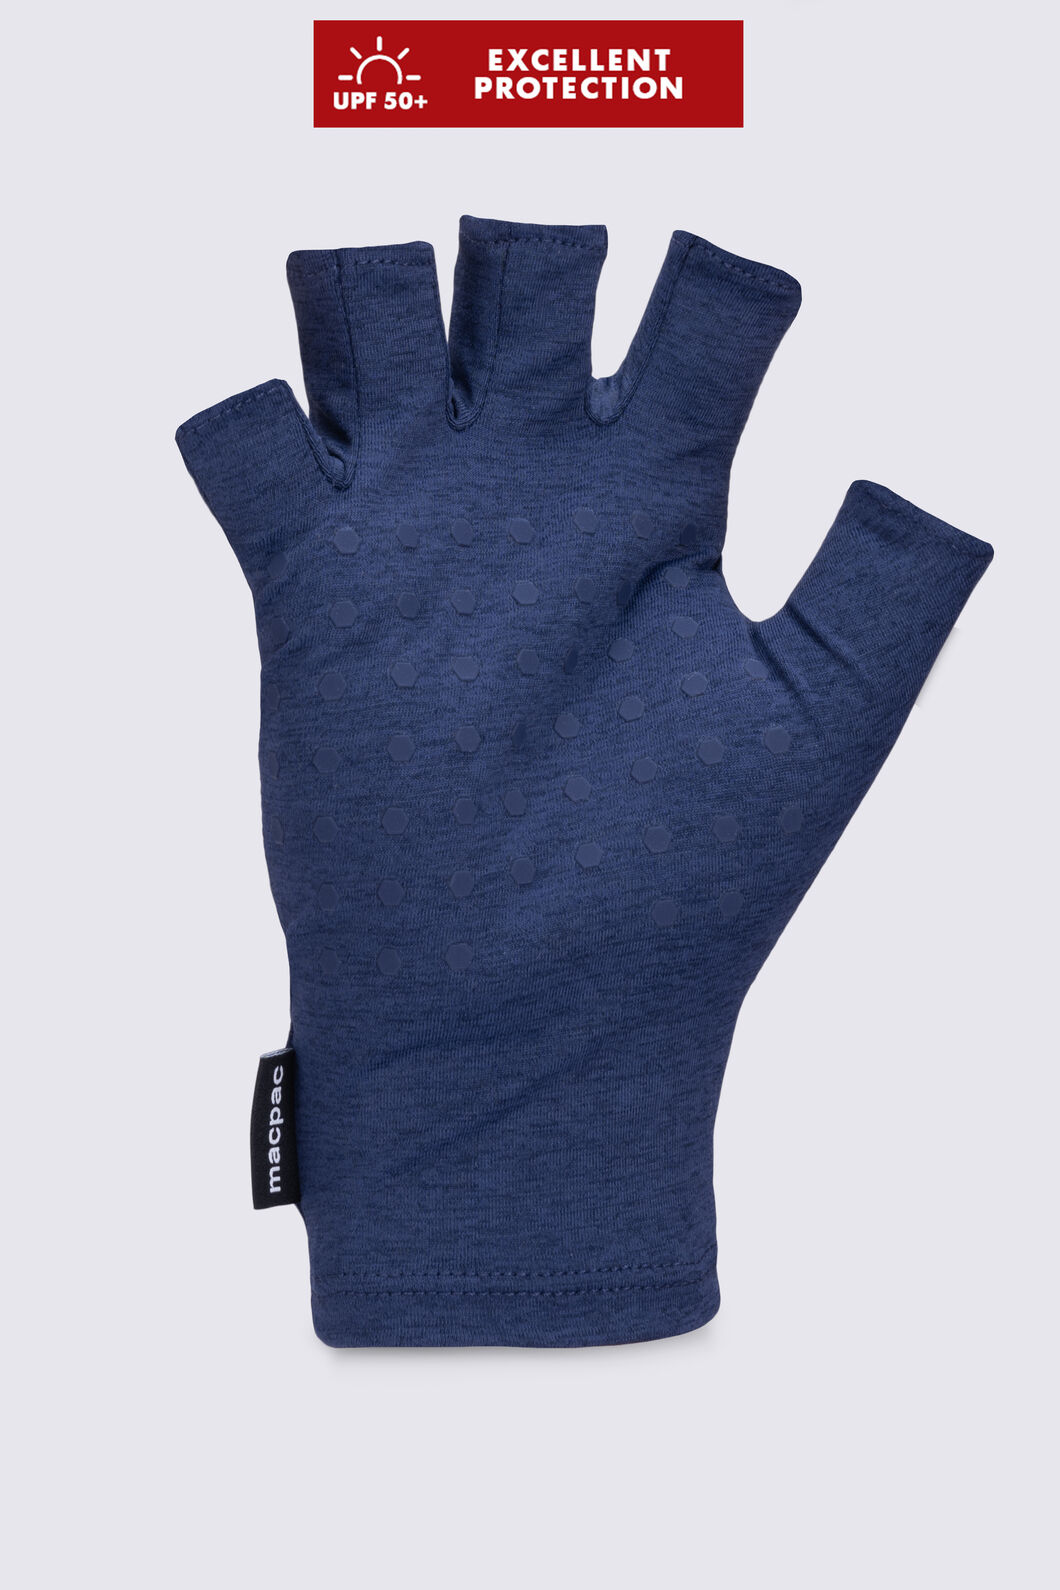 Macpac brrr° Gloves